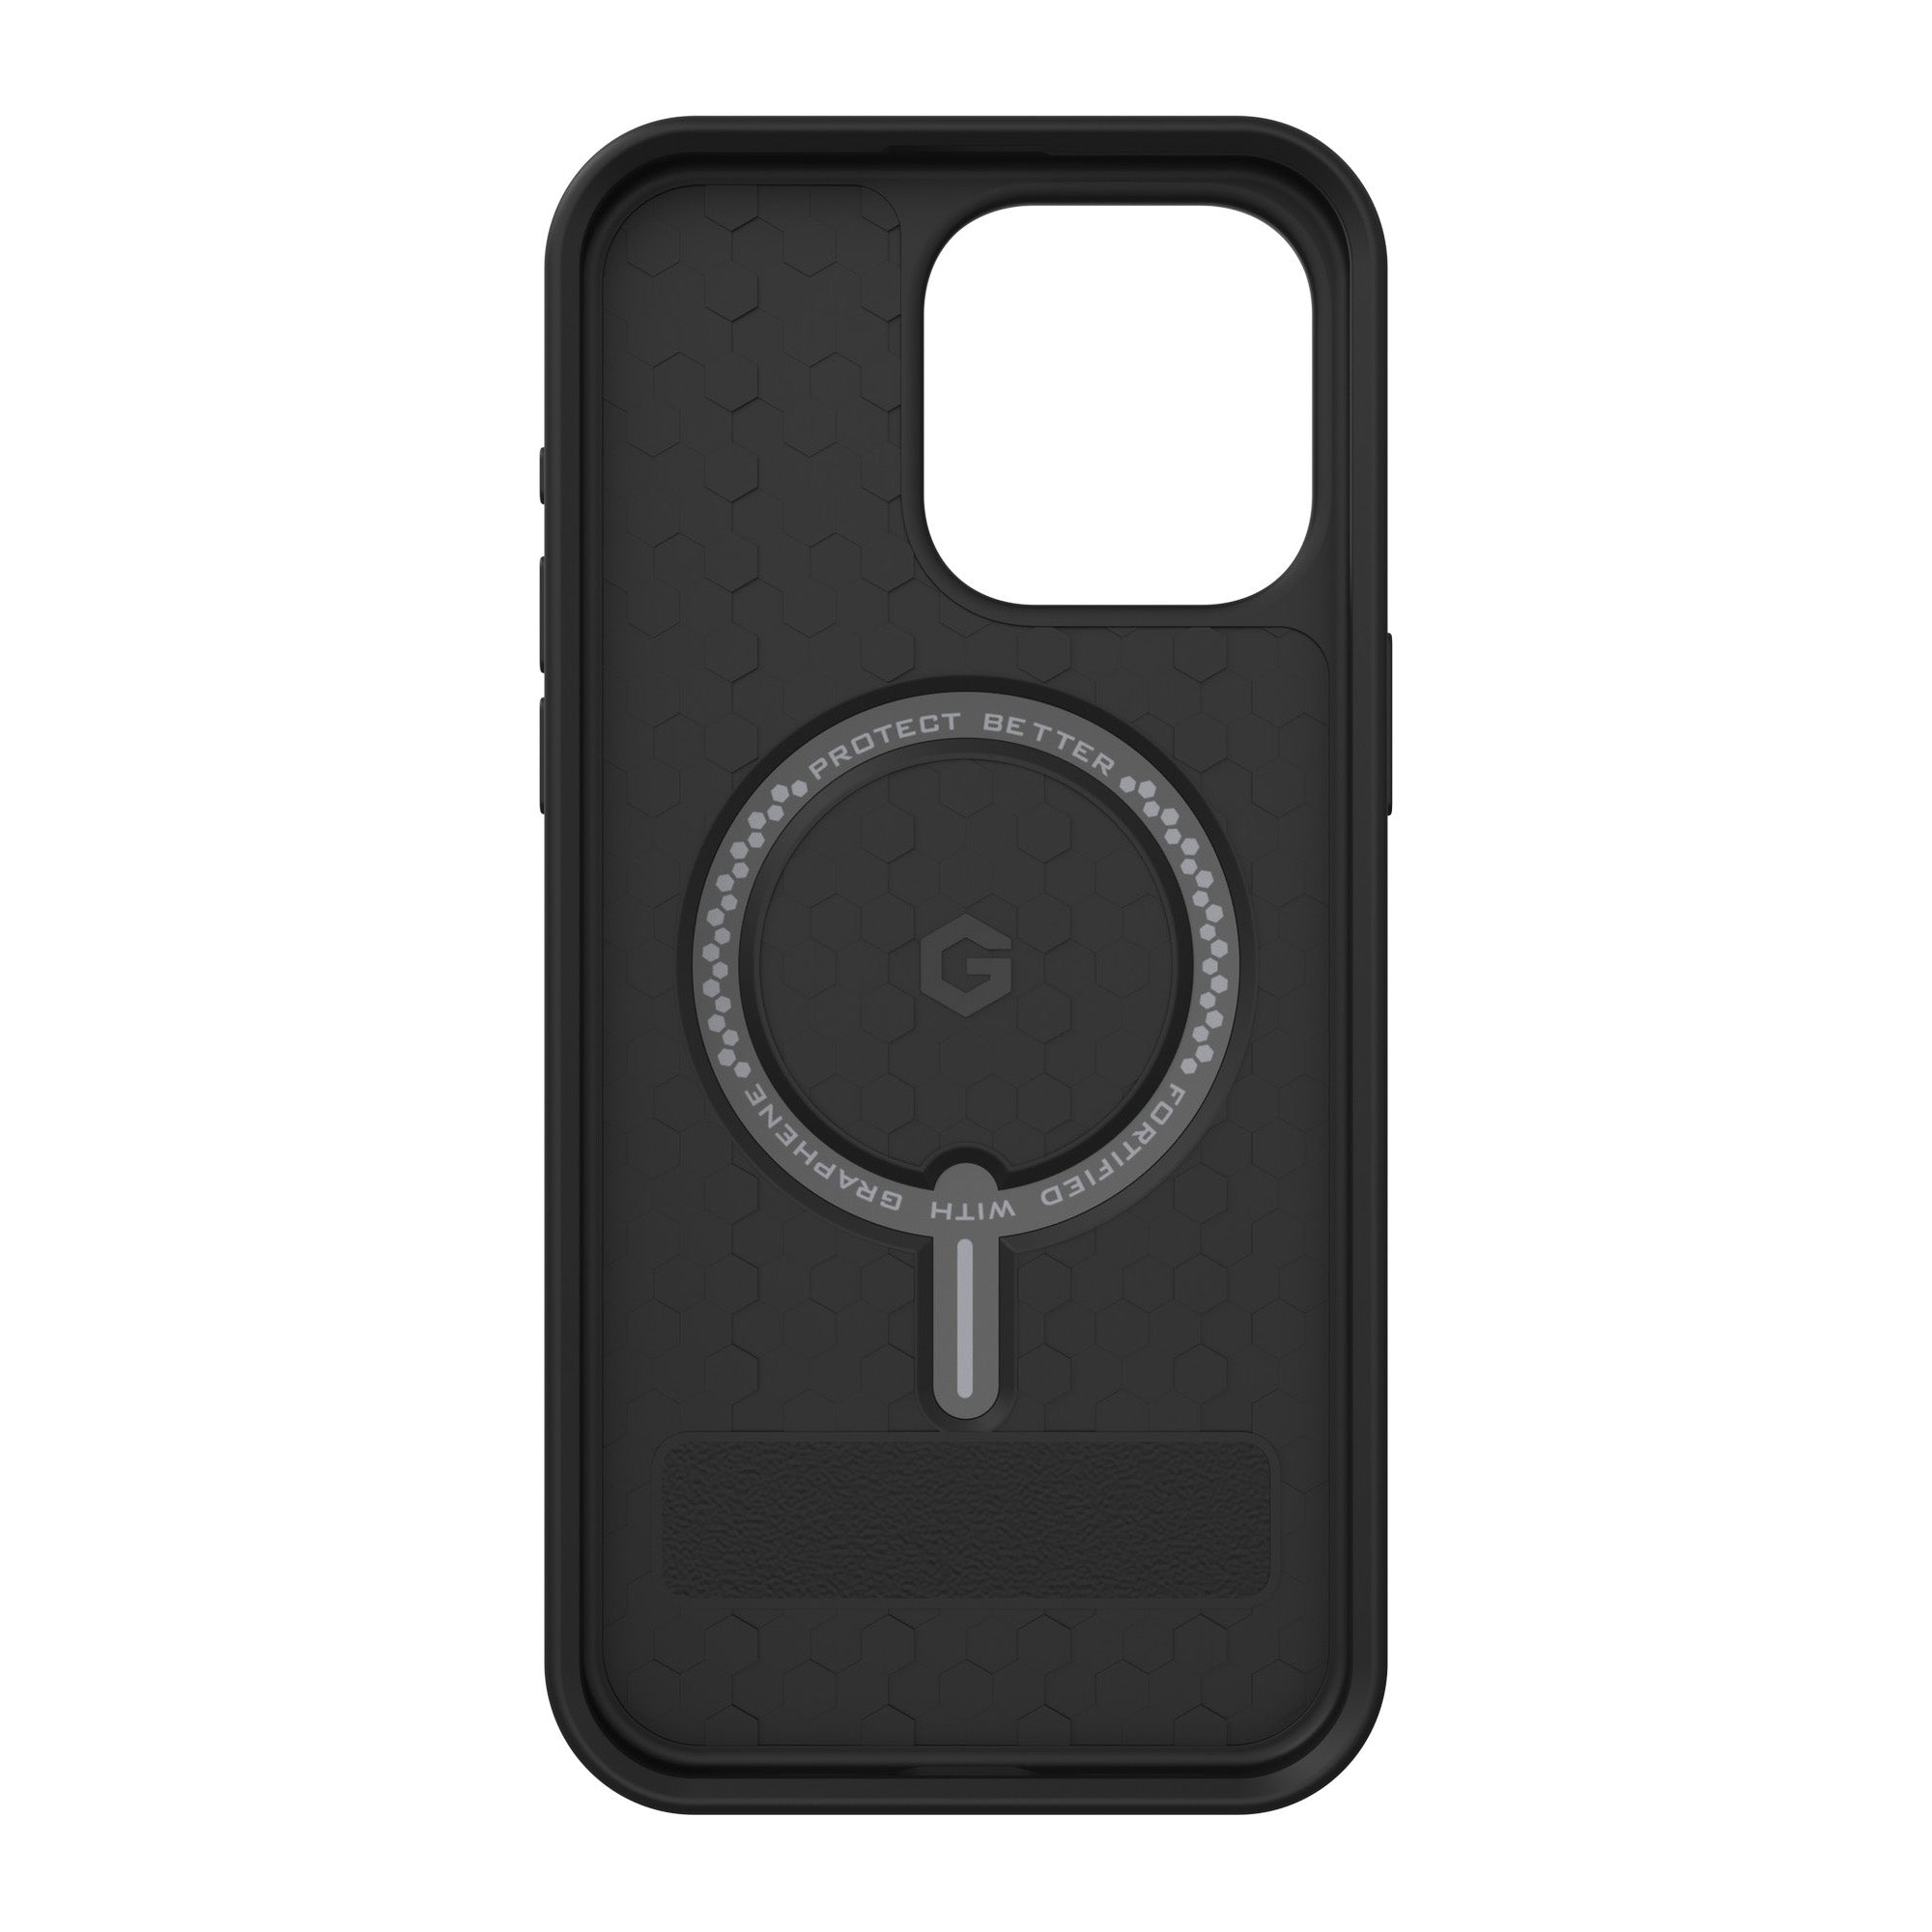 iPhone 15 Pro Max ZAGG (GEAR4) Denali Snap Kickstand Case - Black - 15-11706